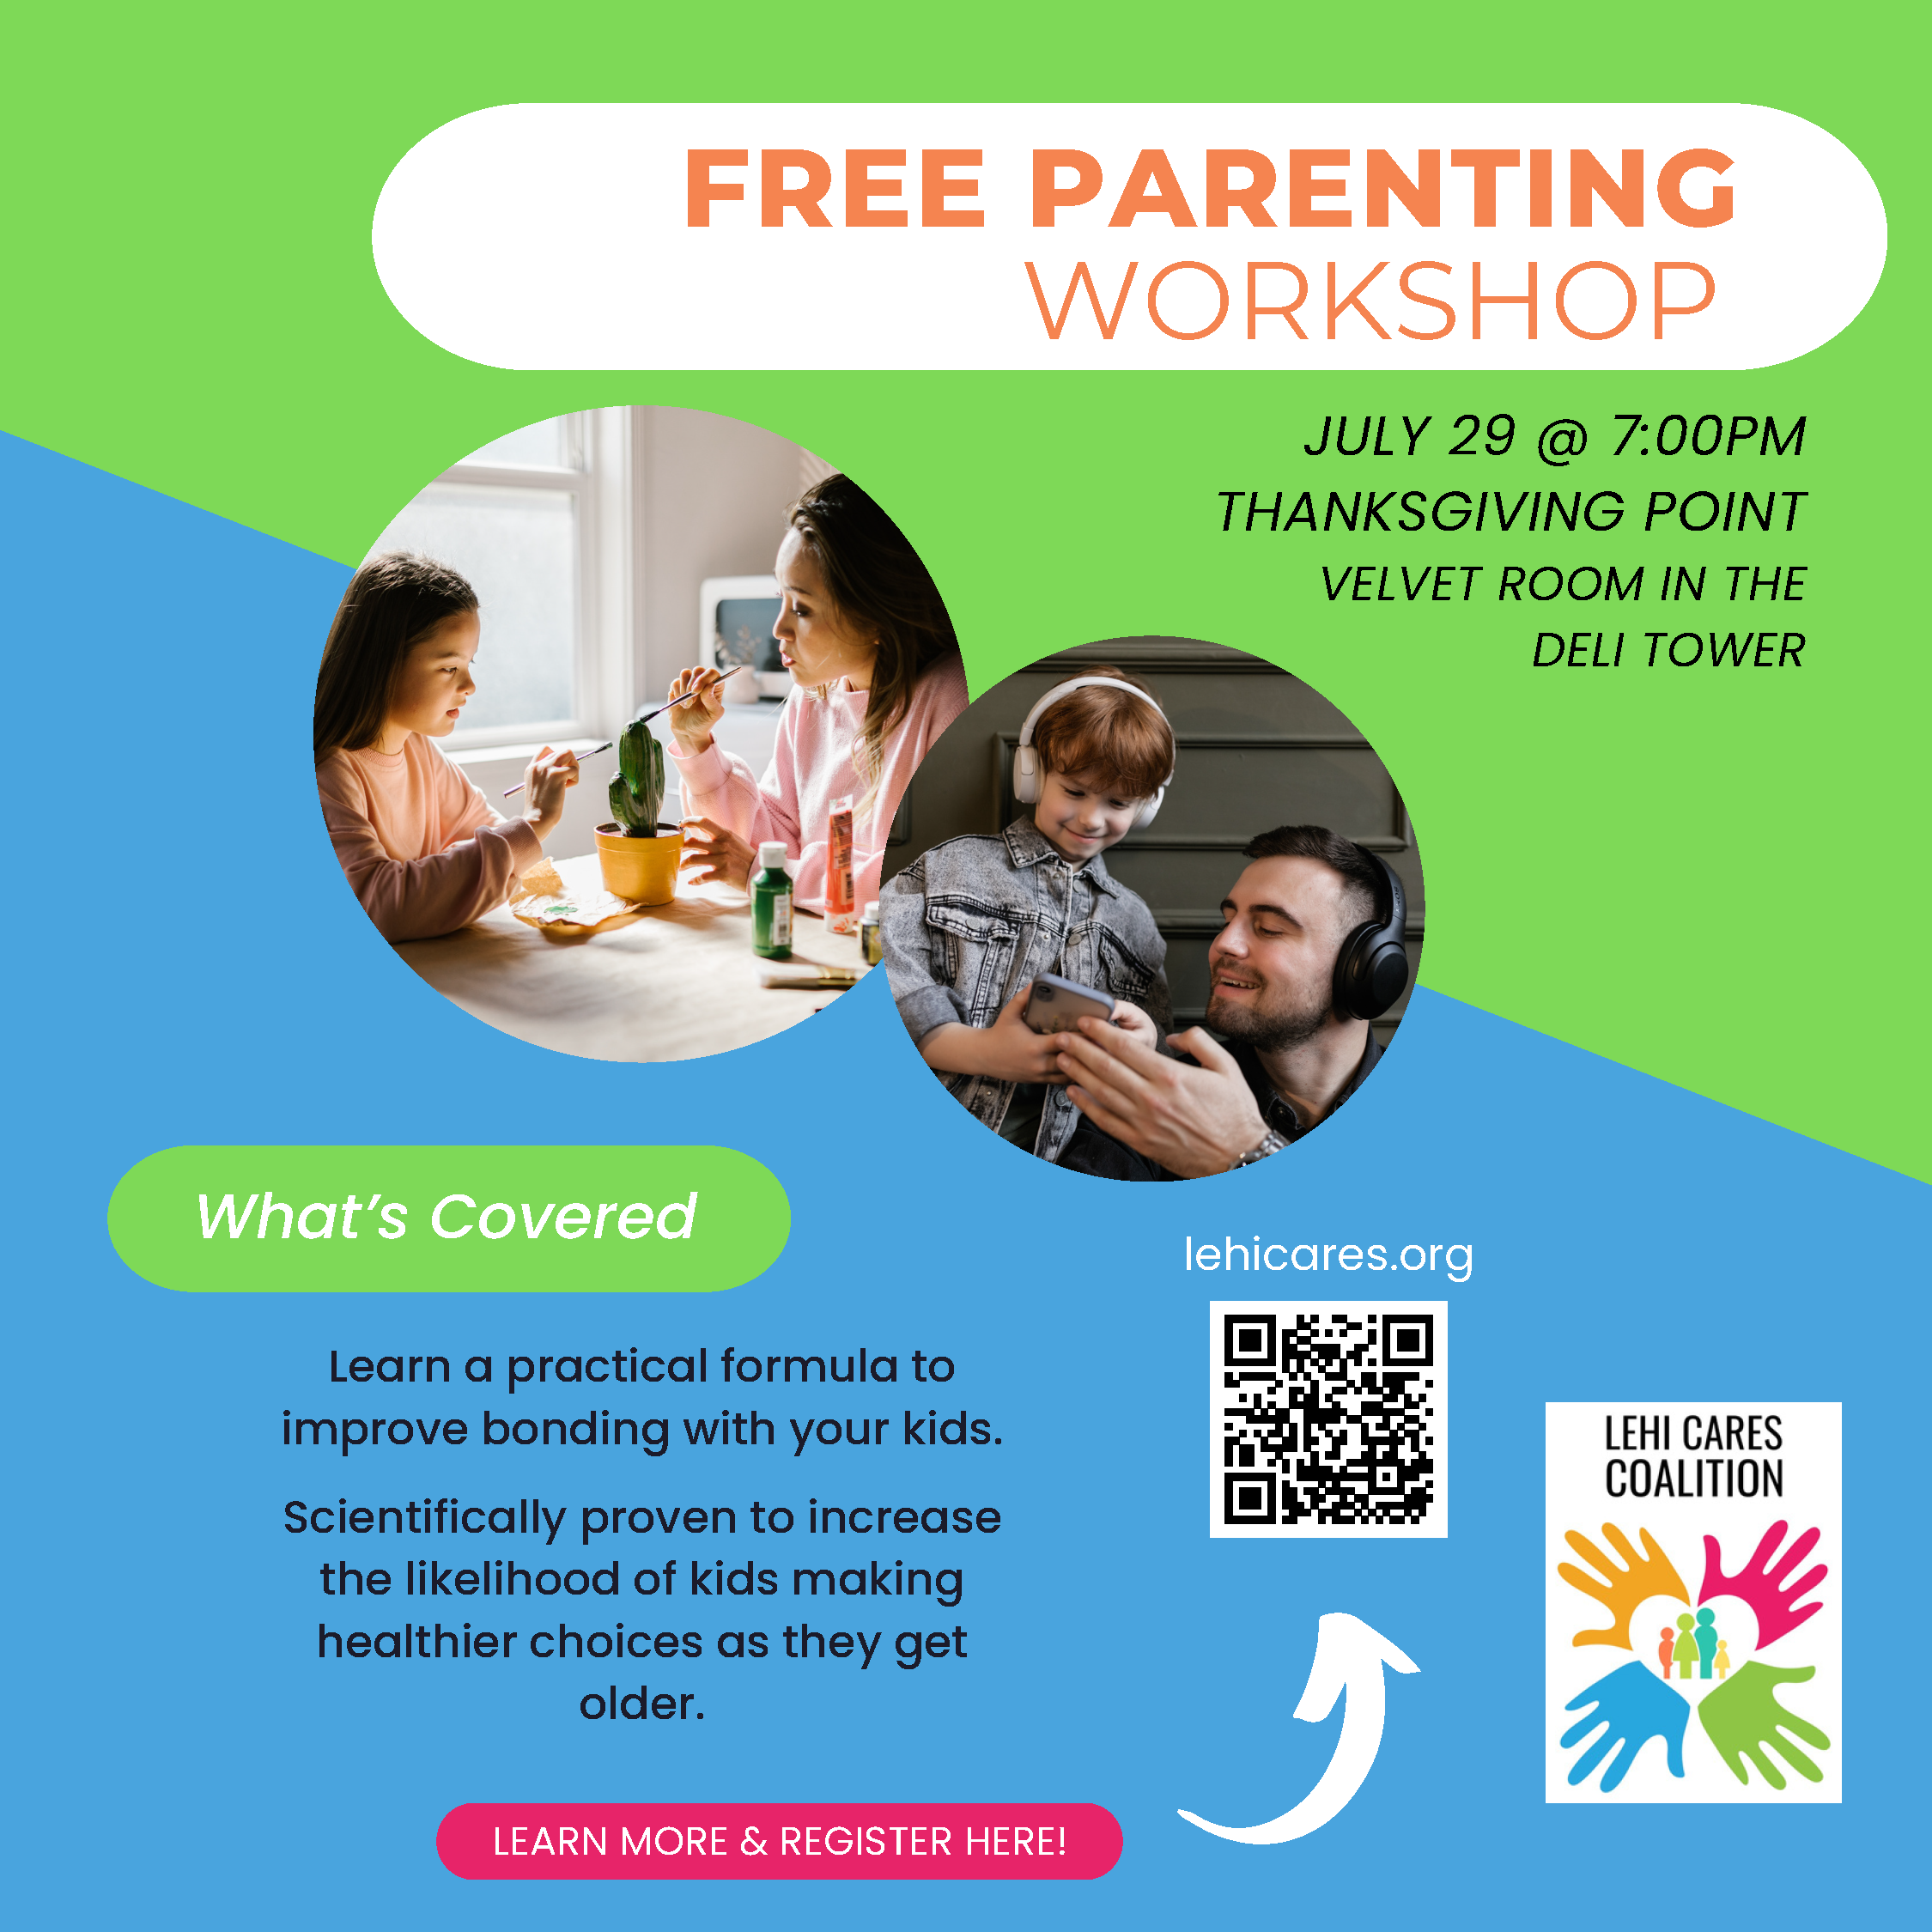 Free parenting workshop